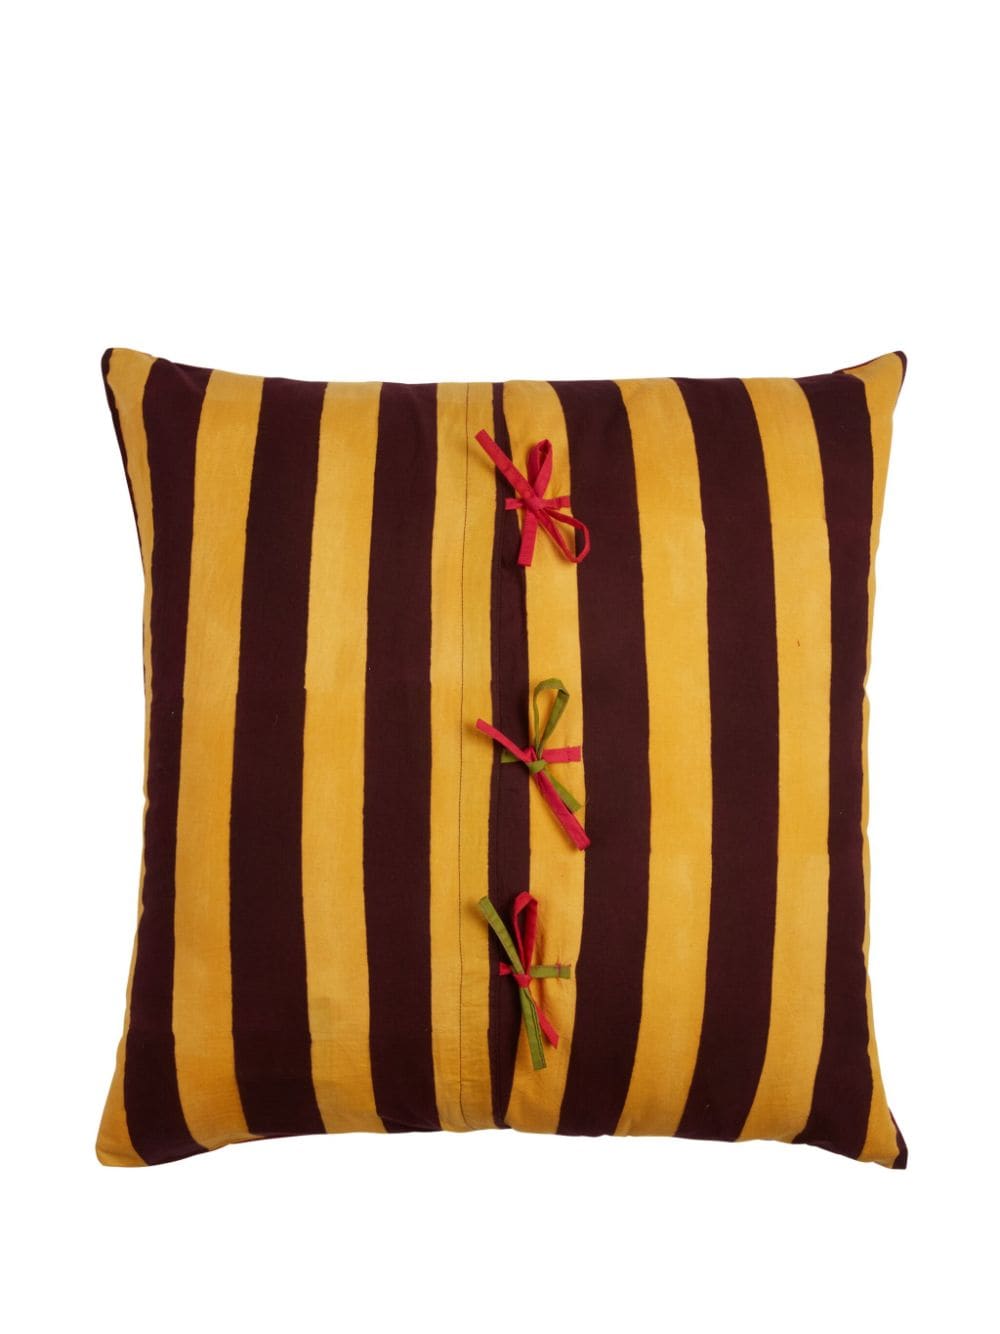 Lisa Corti Nizam Stripes cotton cushion cover (60cm x 60cm) - Mustard maroon